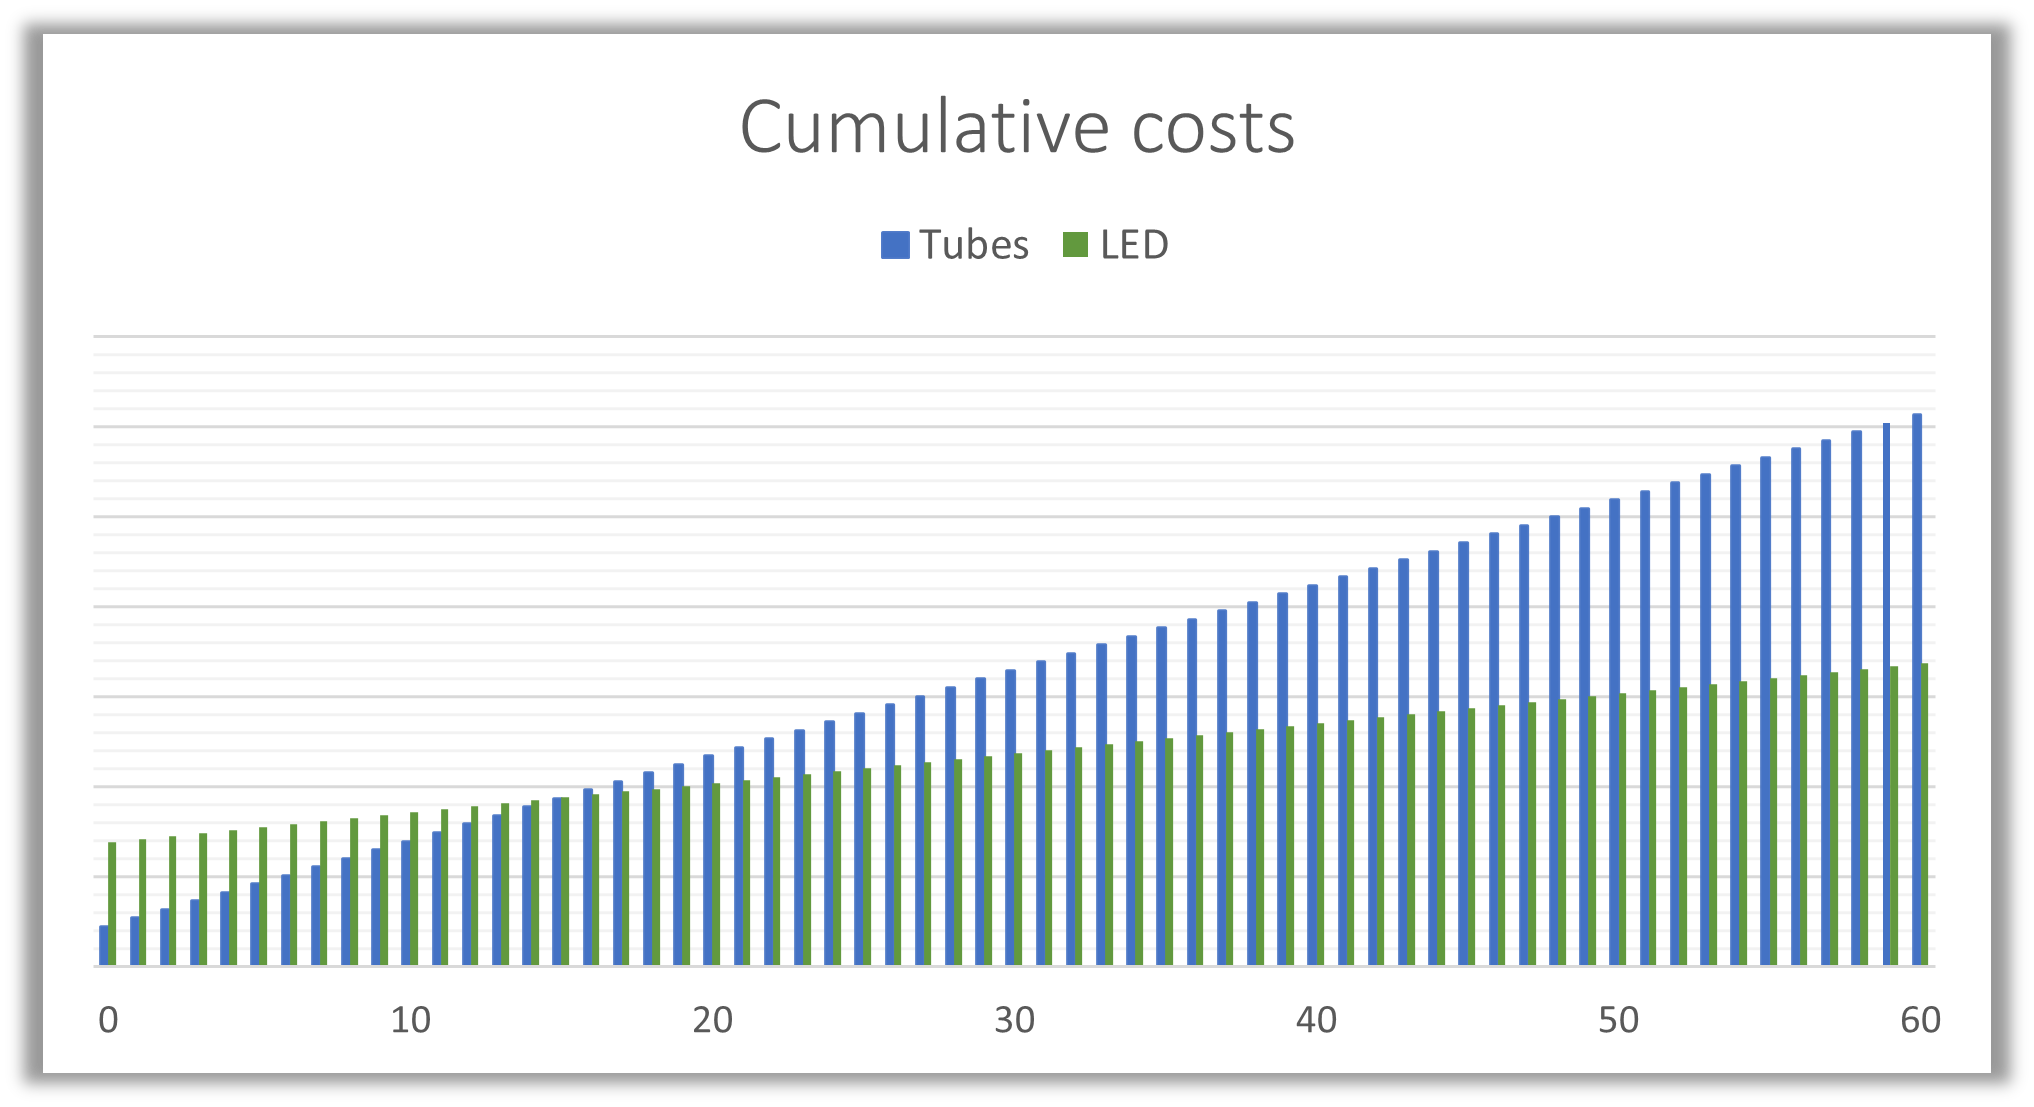 LED advertising site retrofit - cumulative cost savings